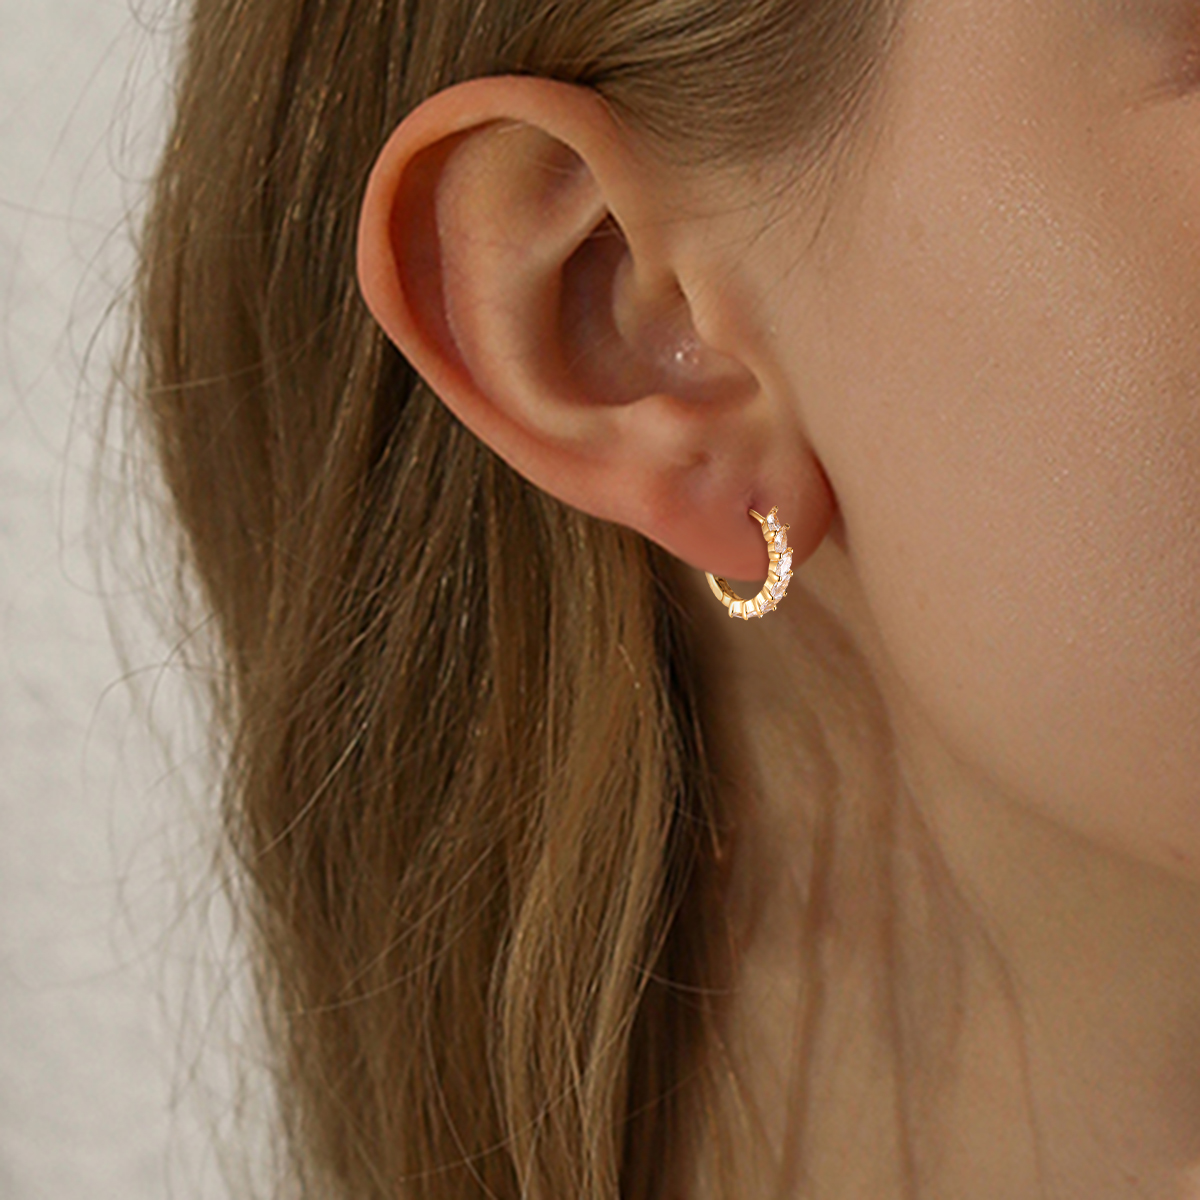 Diamond Streifen Gold-plated Earrings